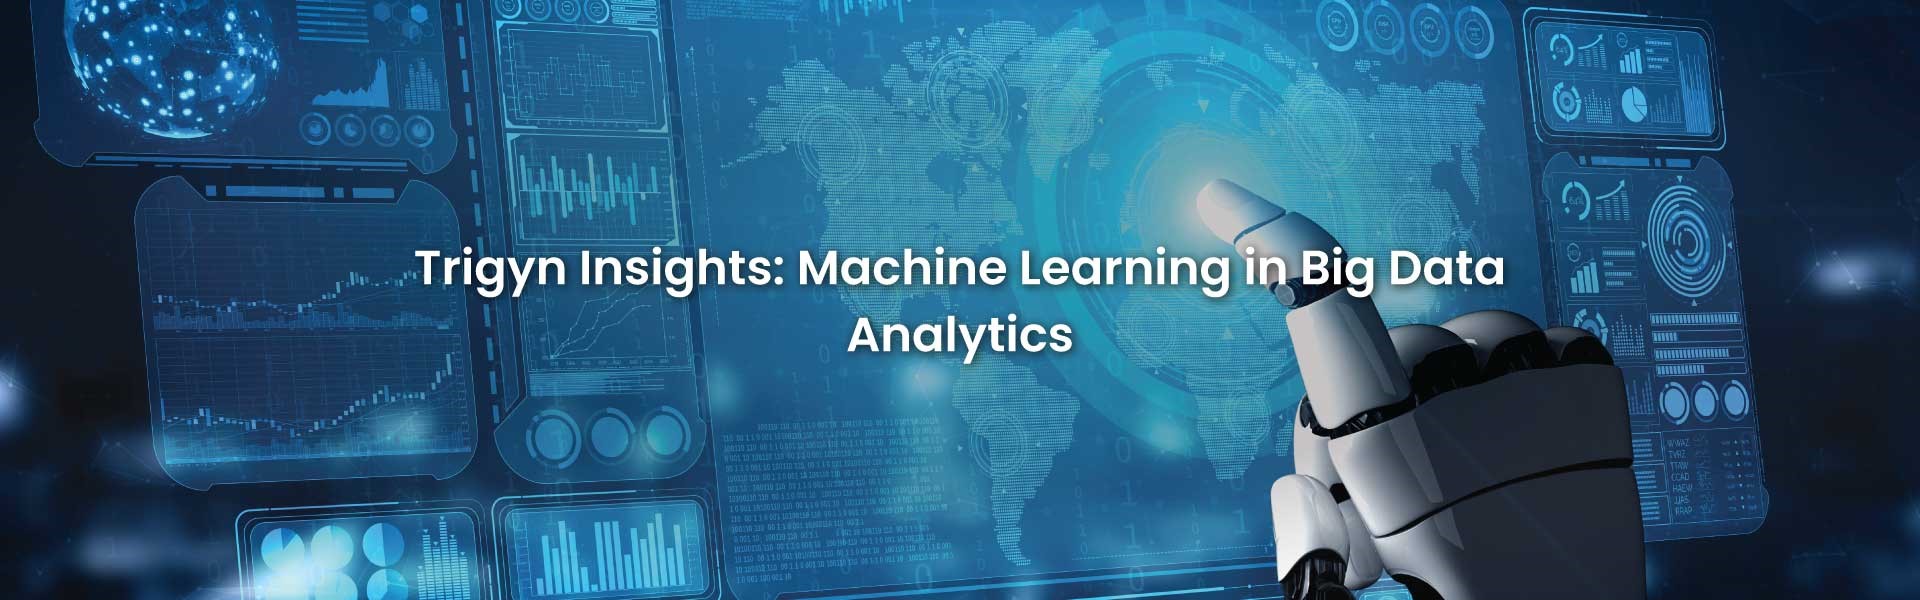 Learning in Big Data Analytics 